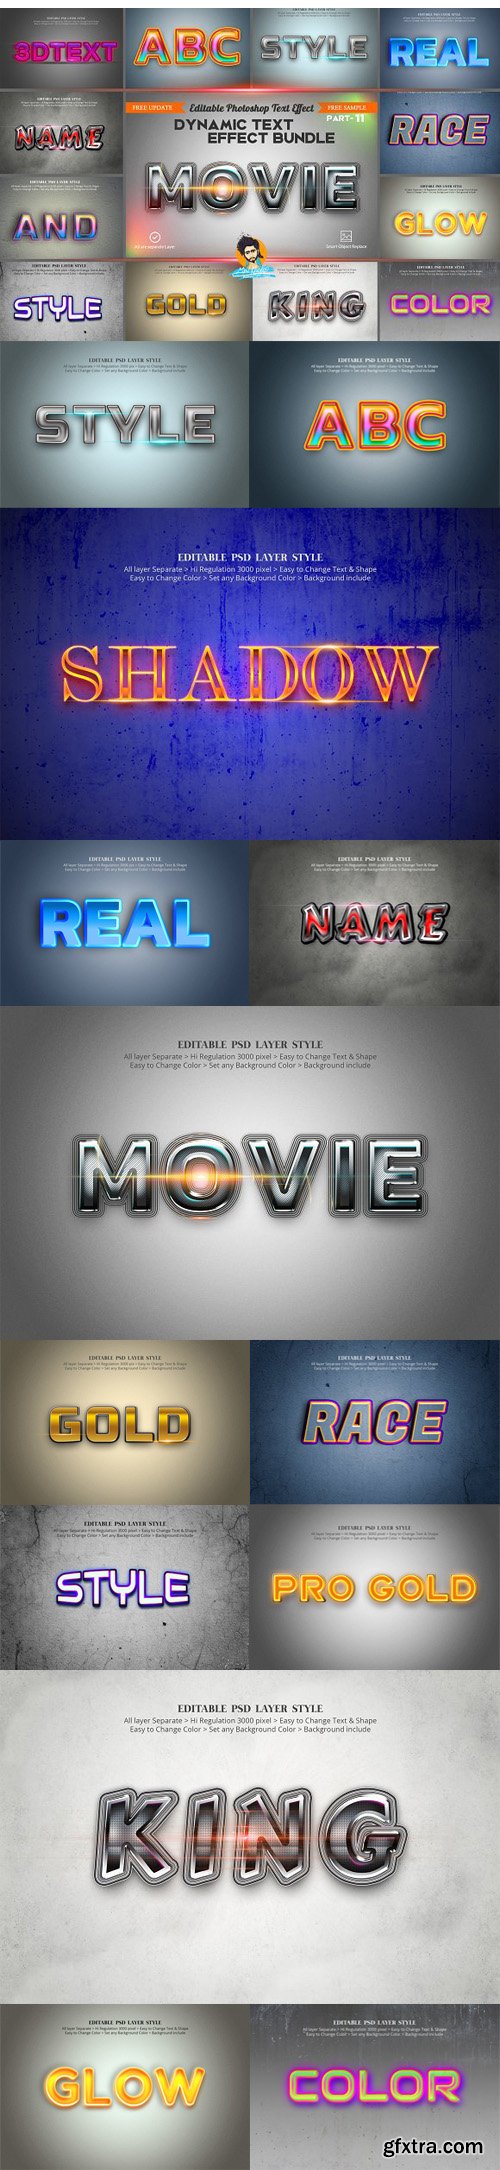 Dynamic Text Effect Bundle - 15 Editable Photoshop Templates